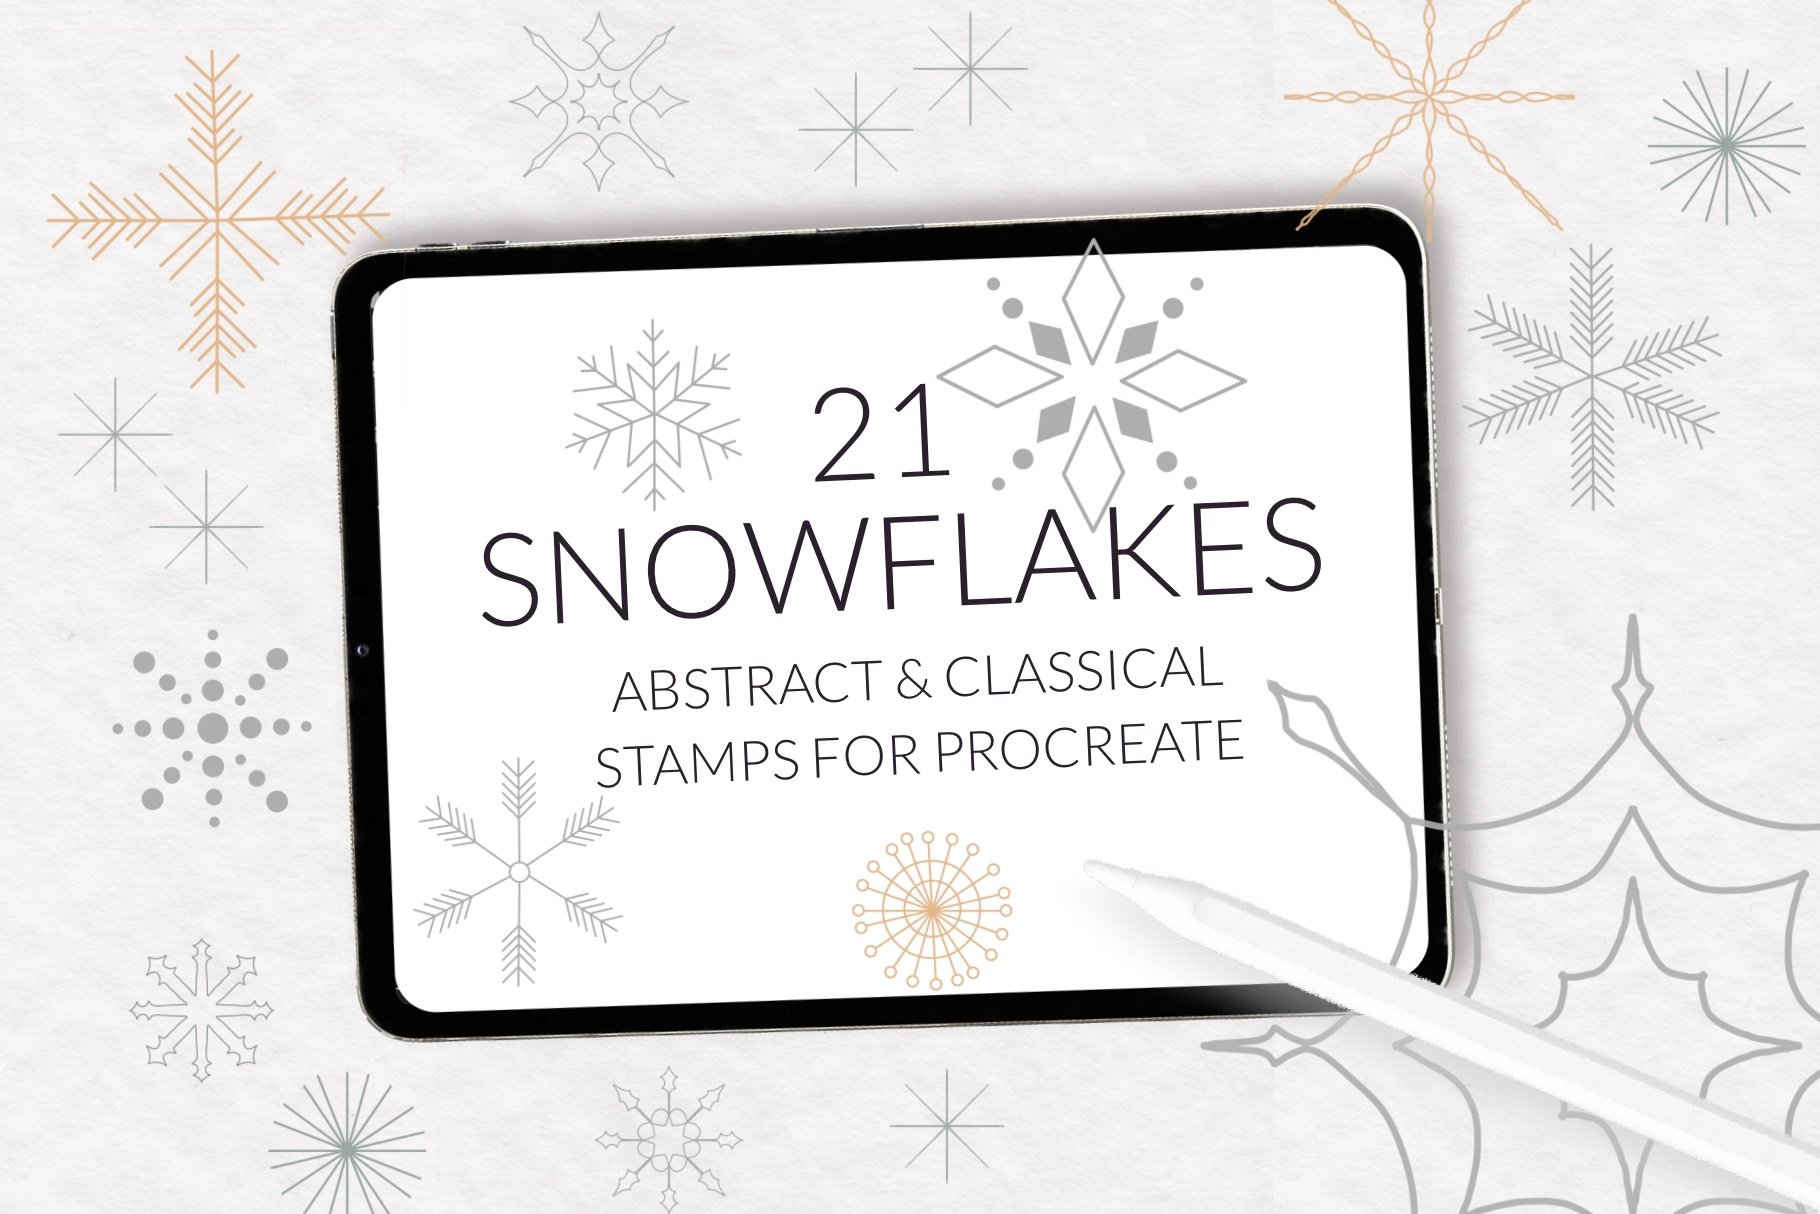 procreate brushes snowflakes free